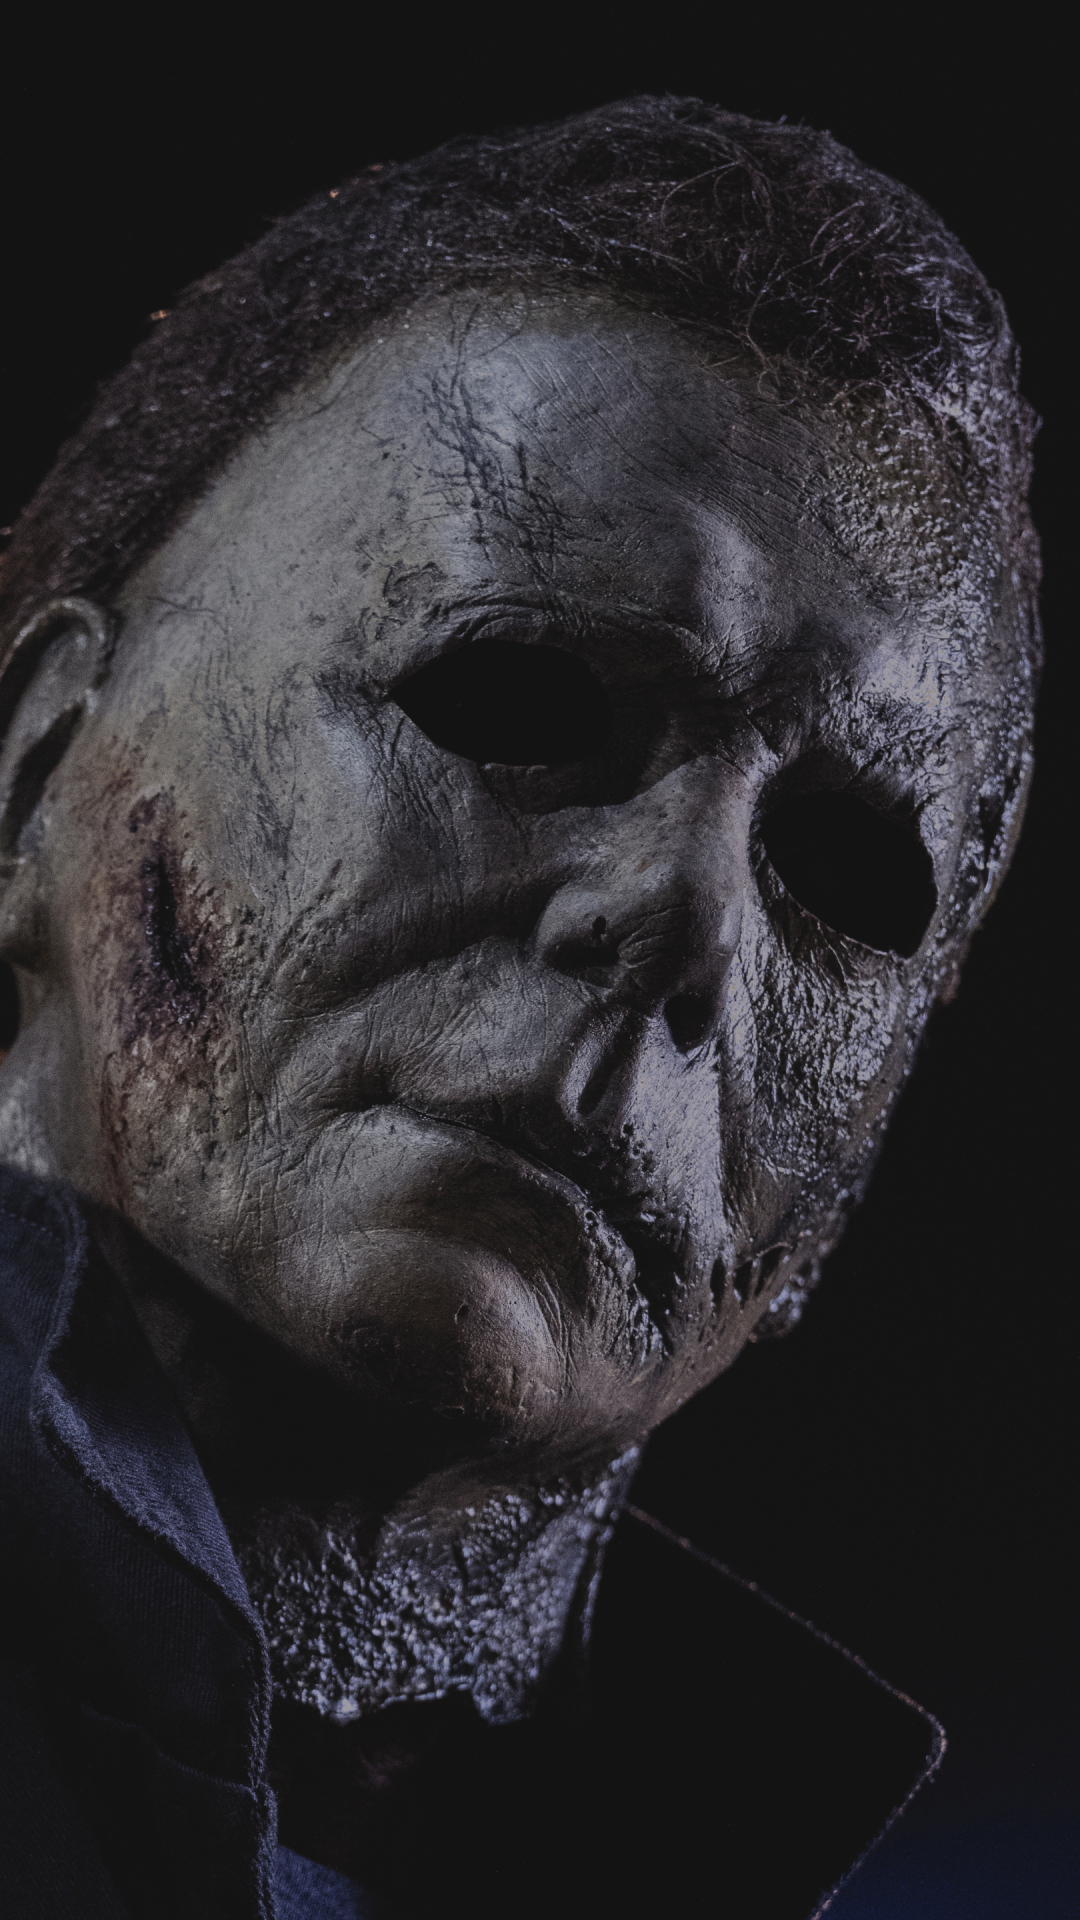 Baixar papel de parede para celular de Filme, Michael Myers, Halloween Kills: O Terror Continua gratuito.